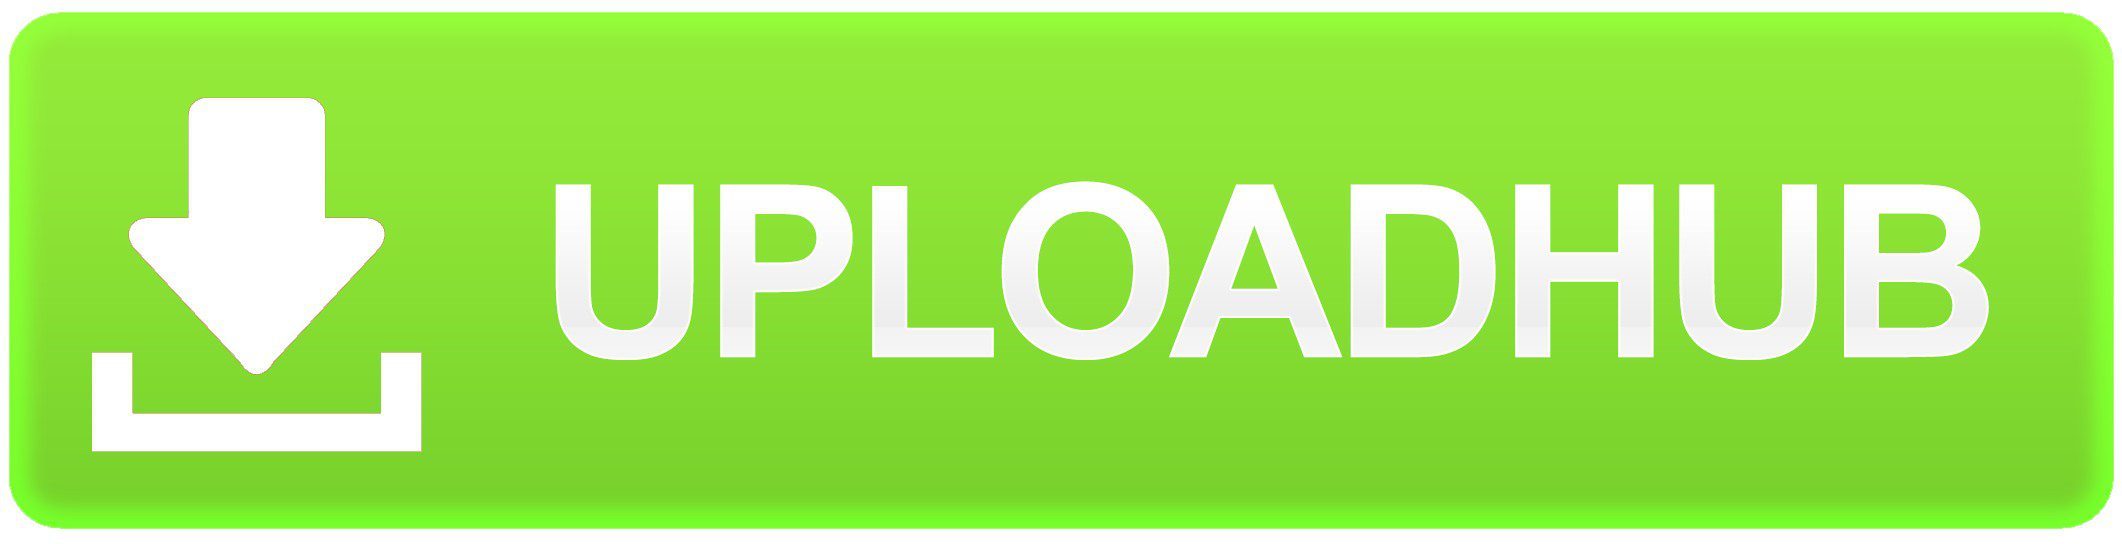 Deiland: Pocket Planet Free Download multiplayer